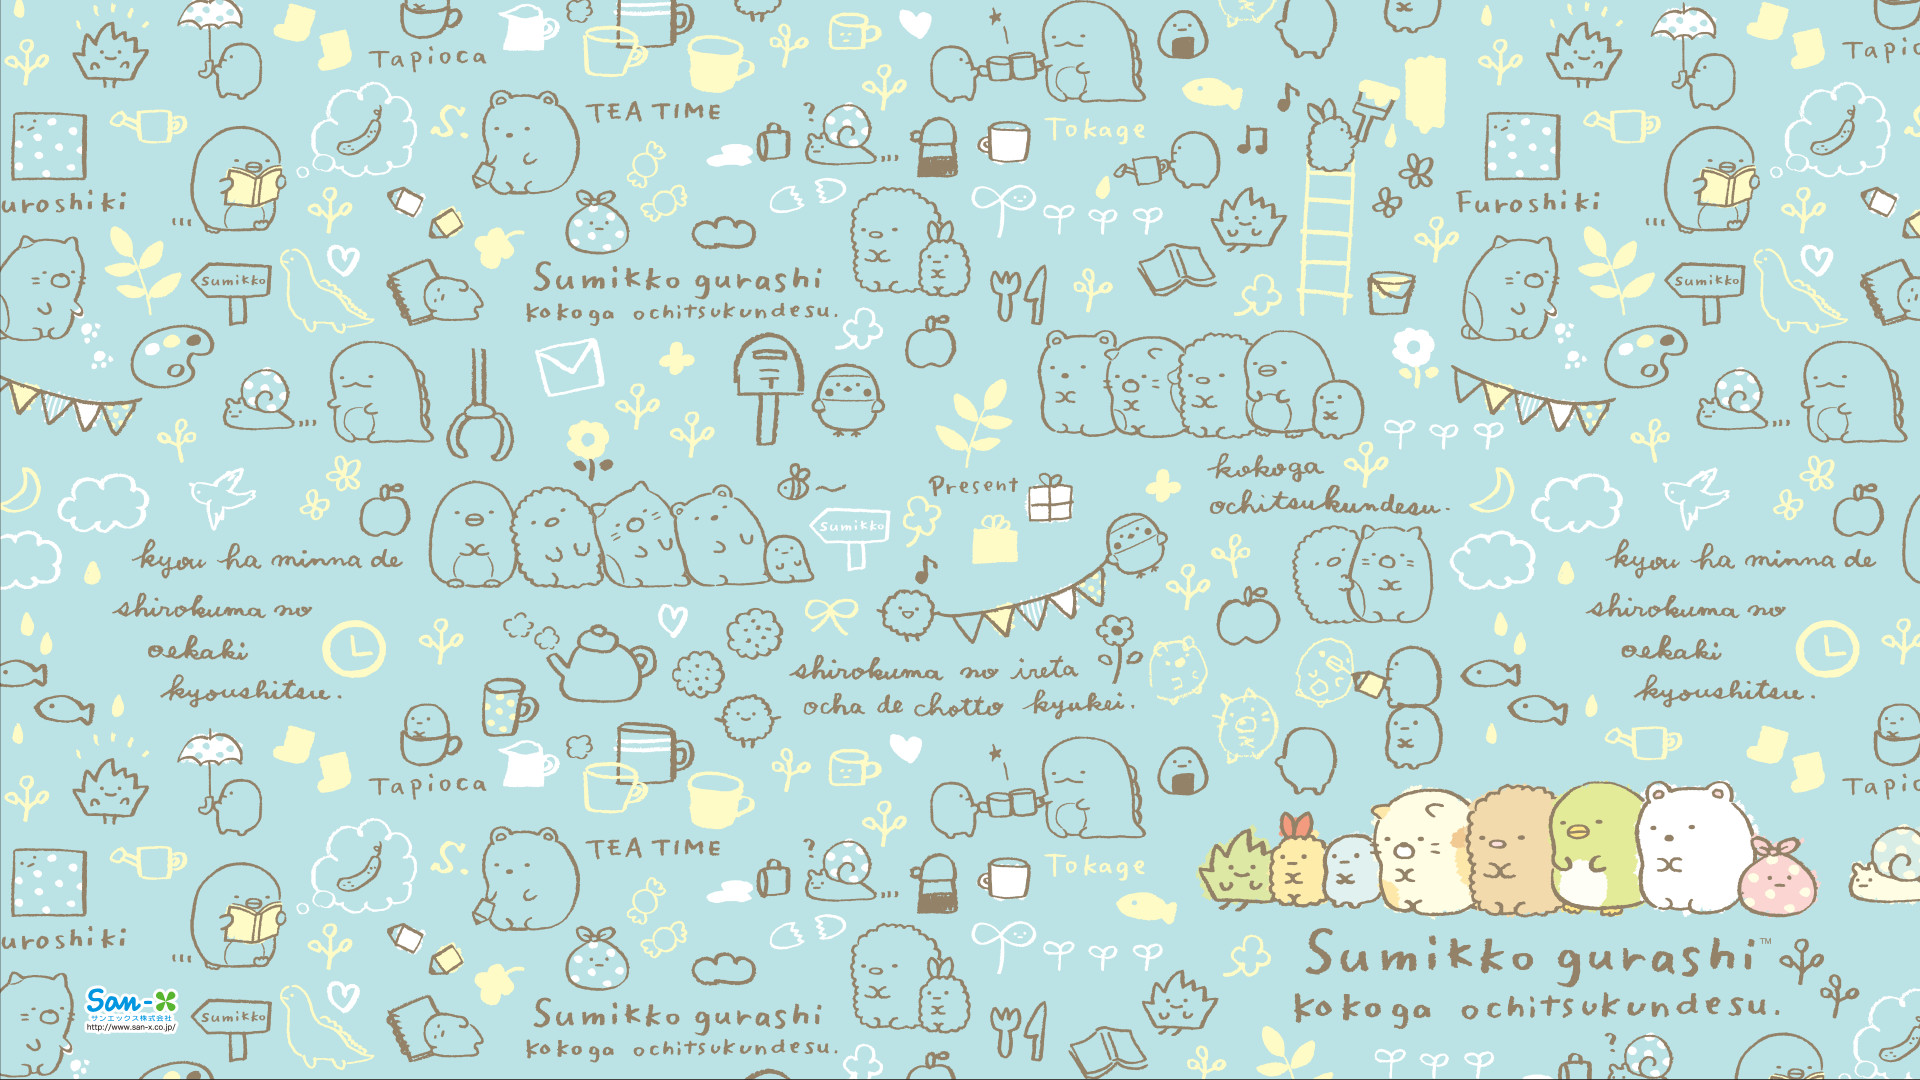 1920x1080 New Sumikkogurashi Tea Time Wallpaper - Sumikkogurashi - Cute little  animals that love to live in corners! From San-X, I love the blue, yellow  and brown ...